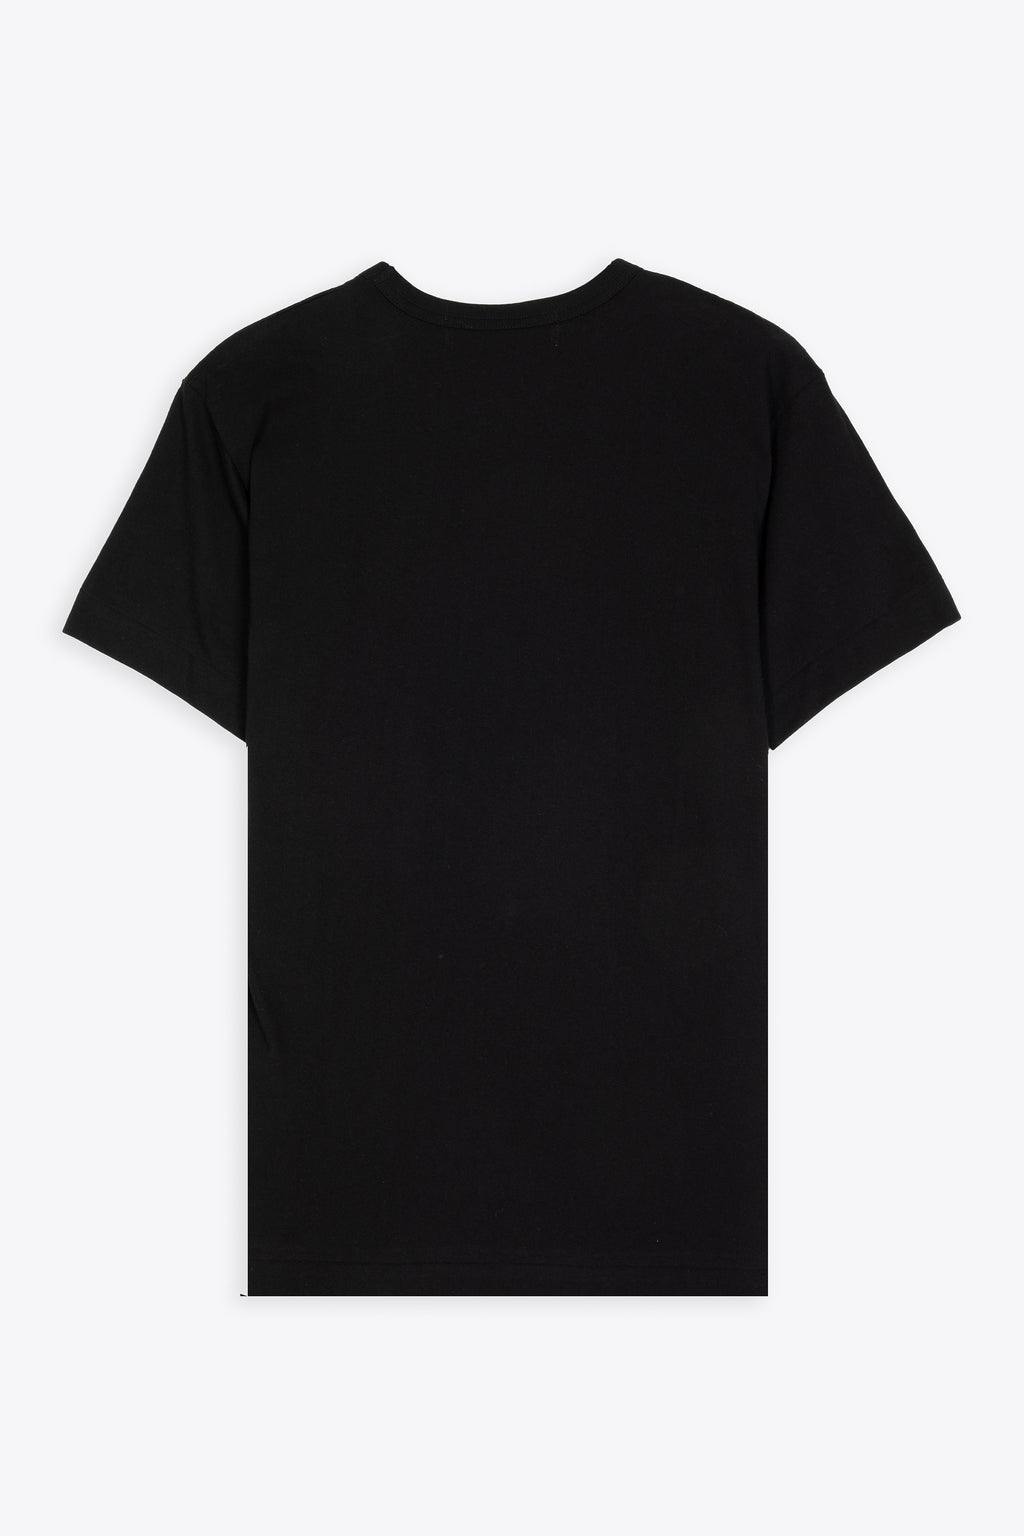 alt-image__Black-cotton-t-shirt-with-big-heart-print